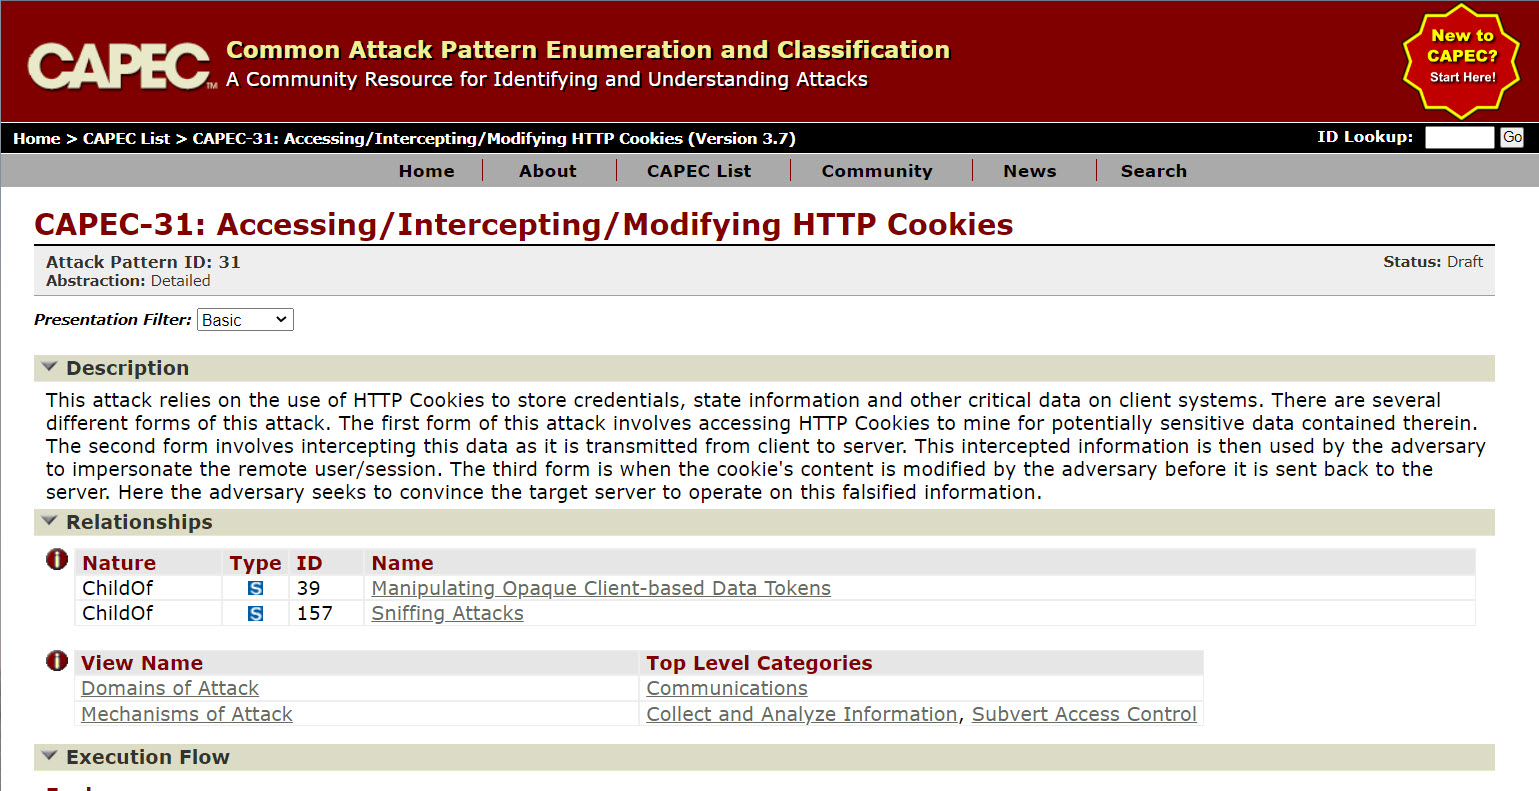 CAPEC-31: Accessing/Intercepting/Modifying HTTP Cookies